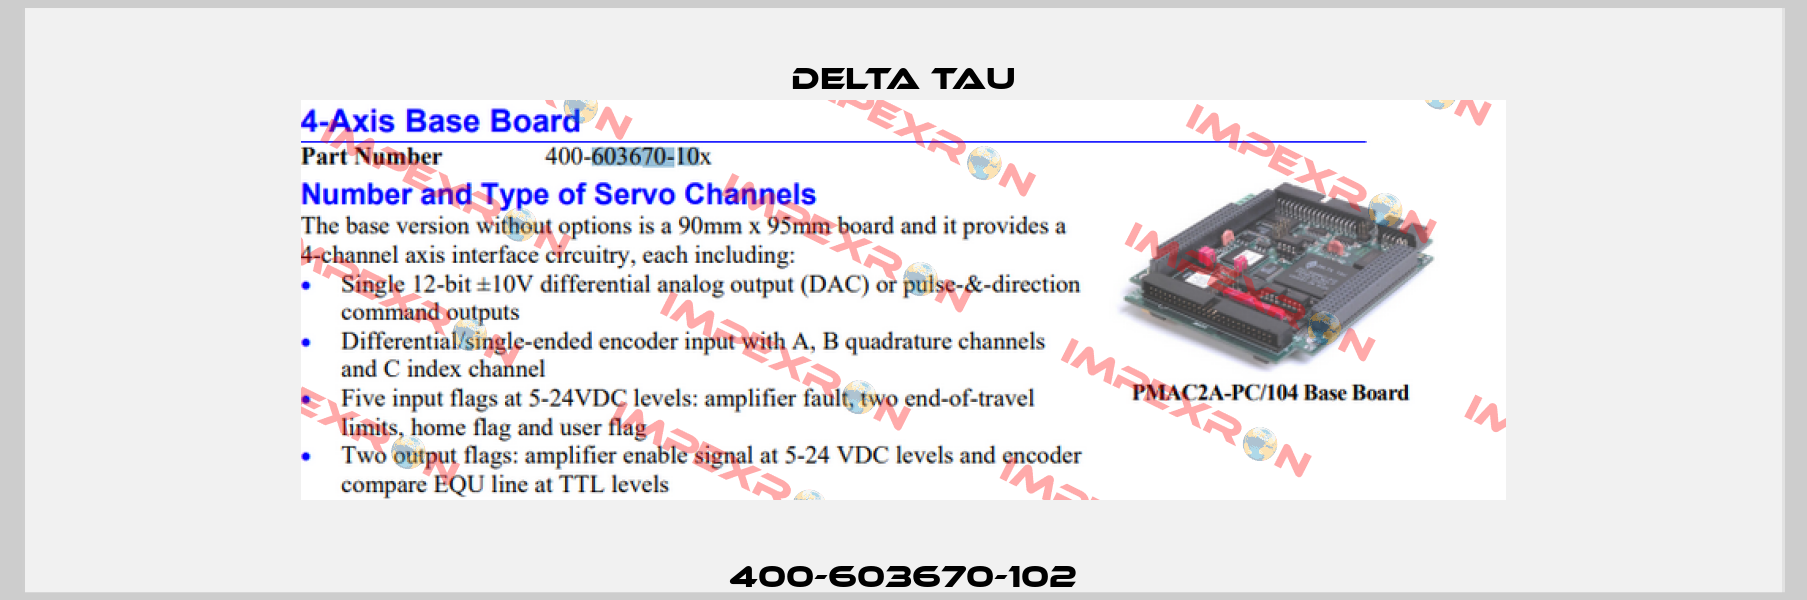 400-603670-102 Delta Tau